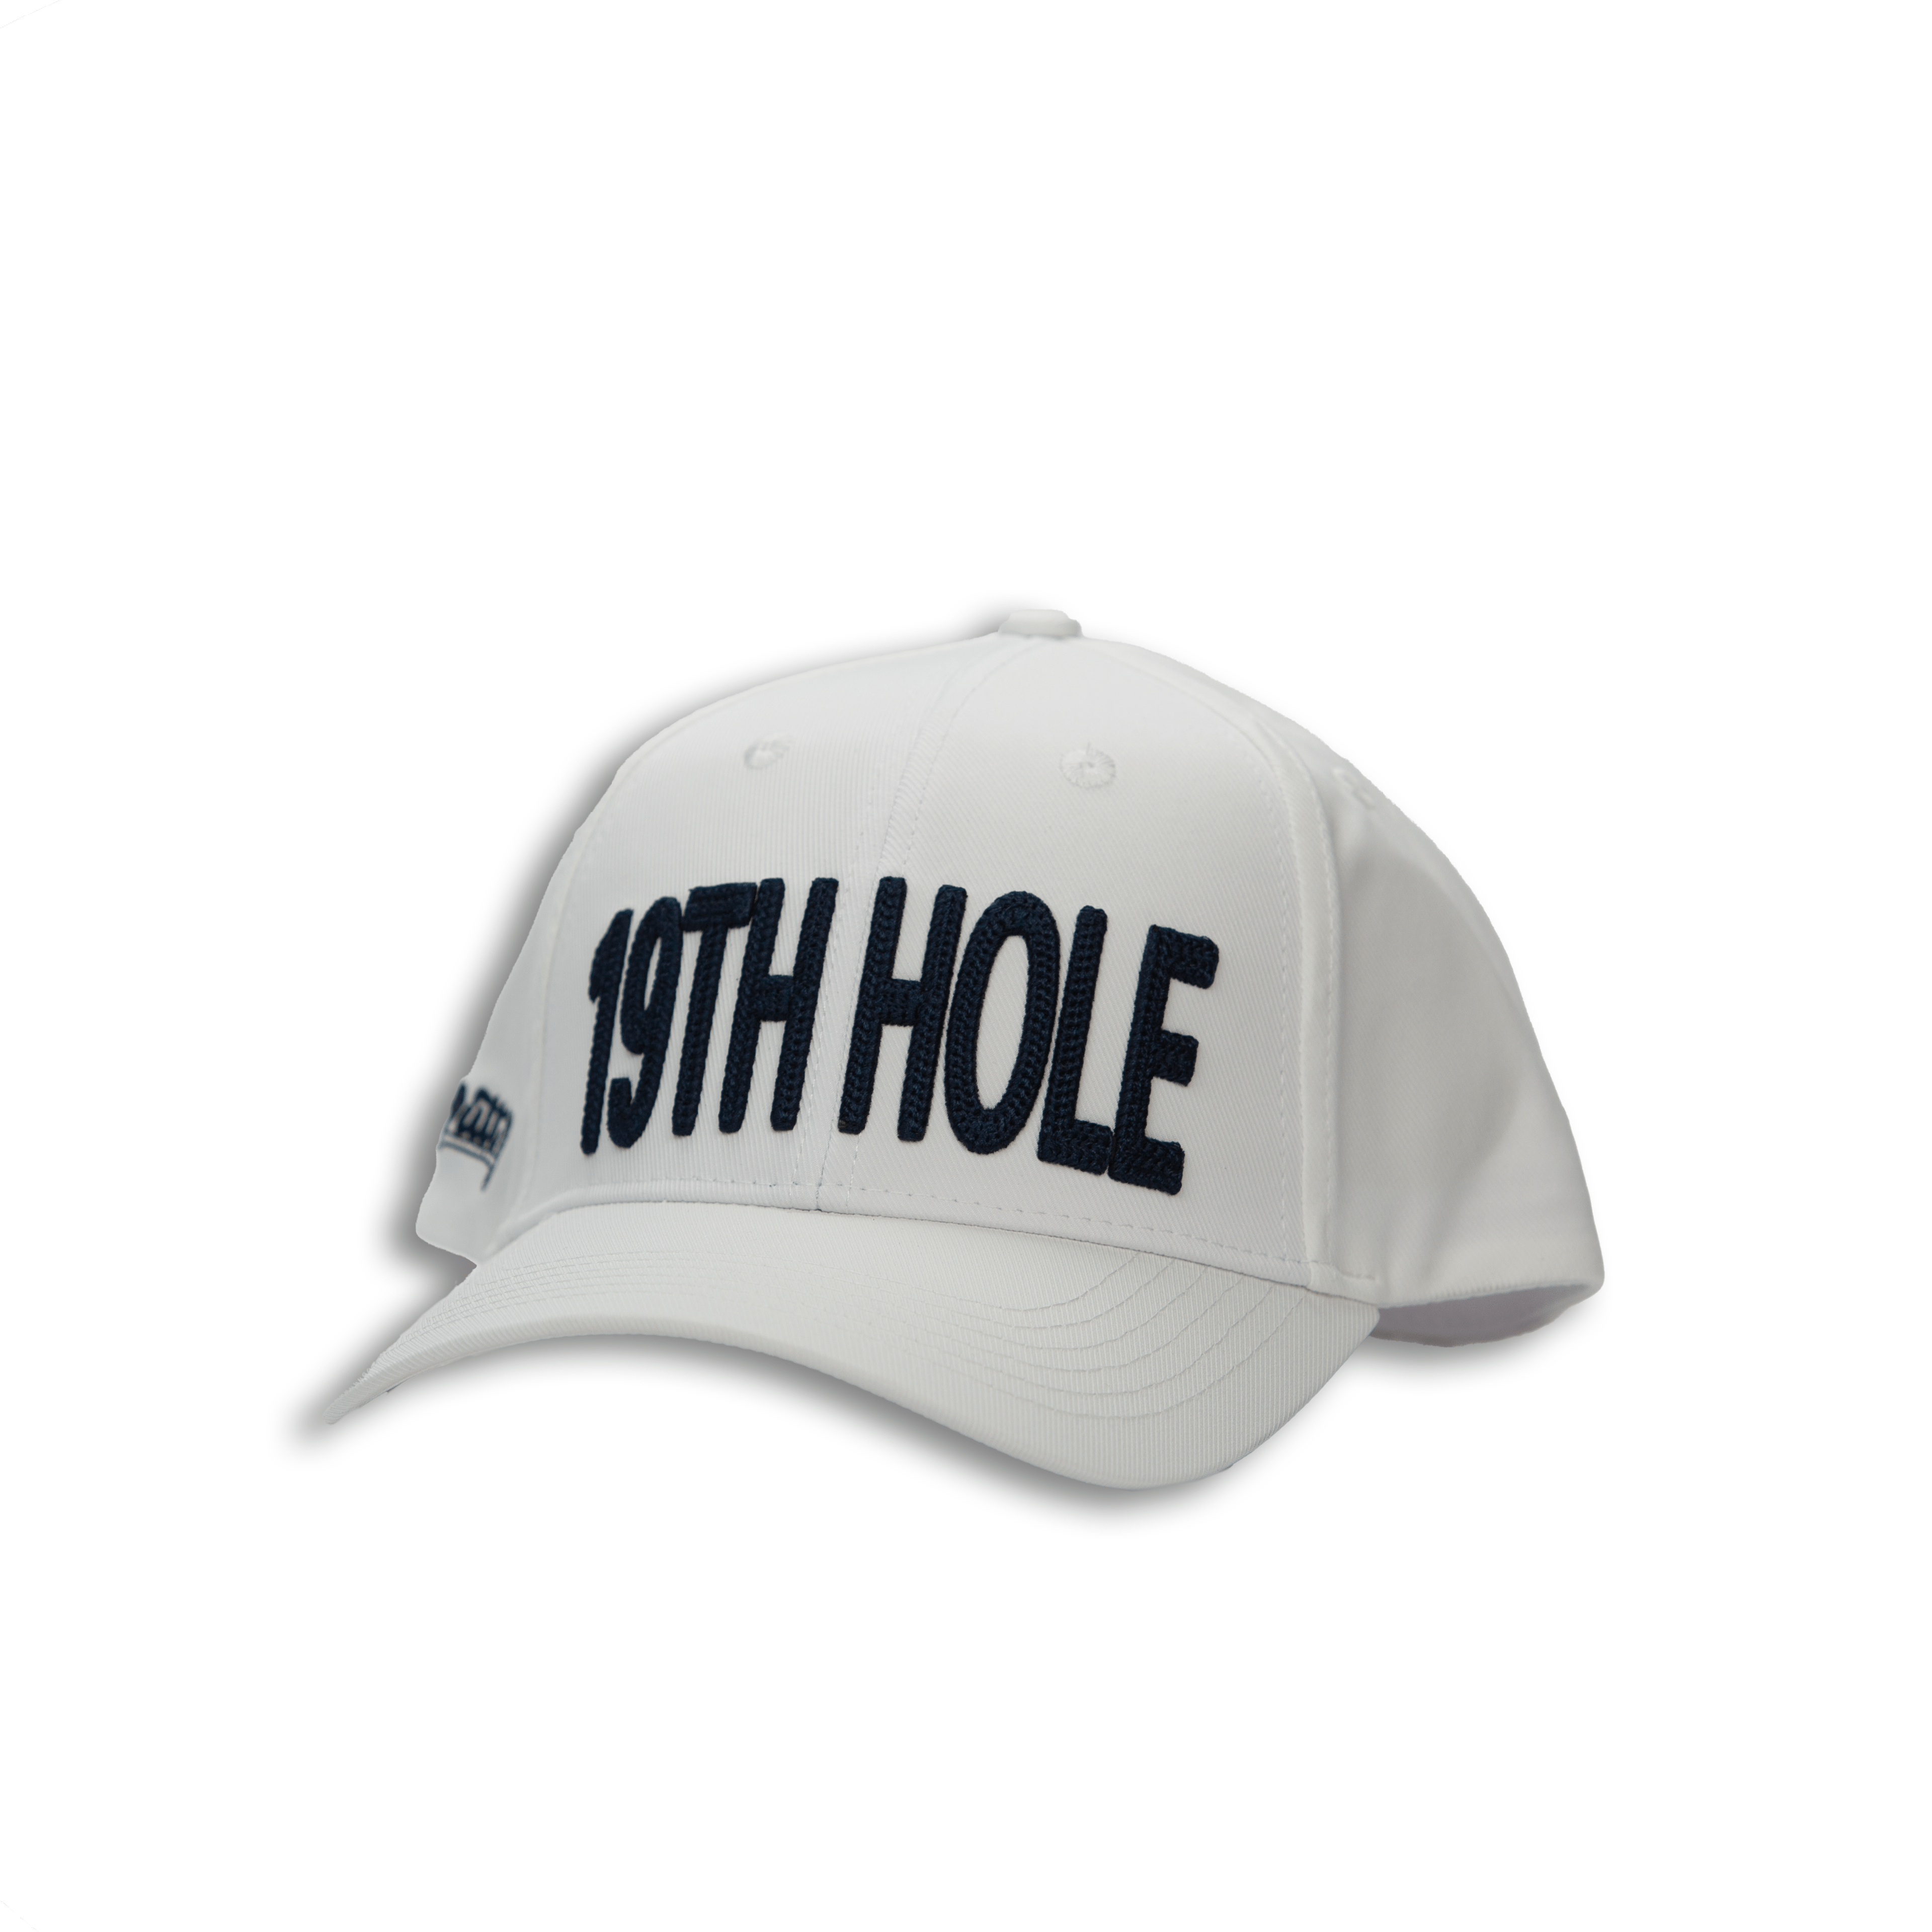 19TH HOLE Hat